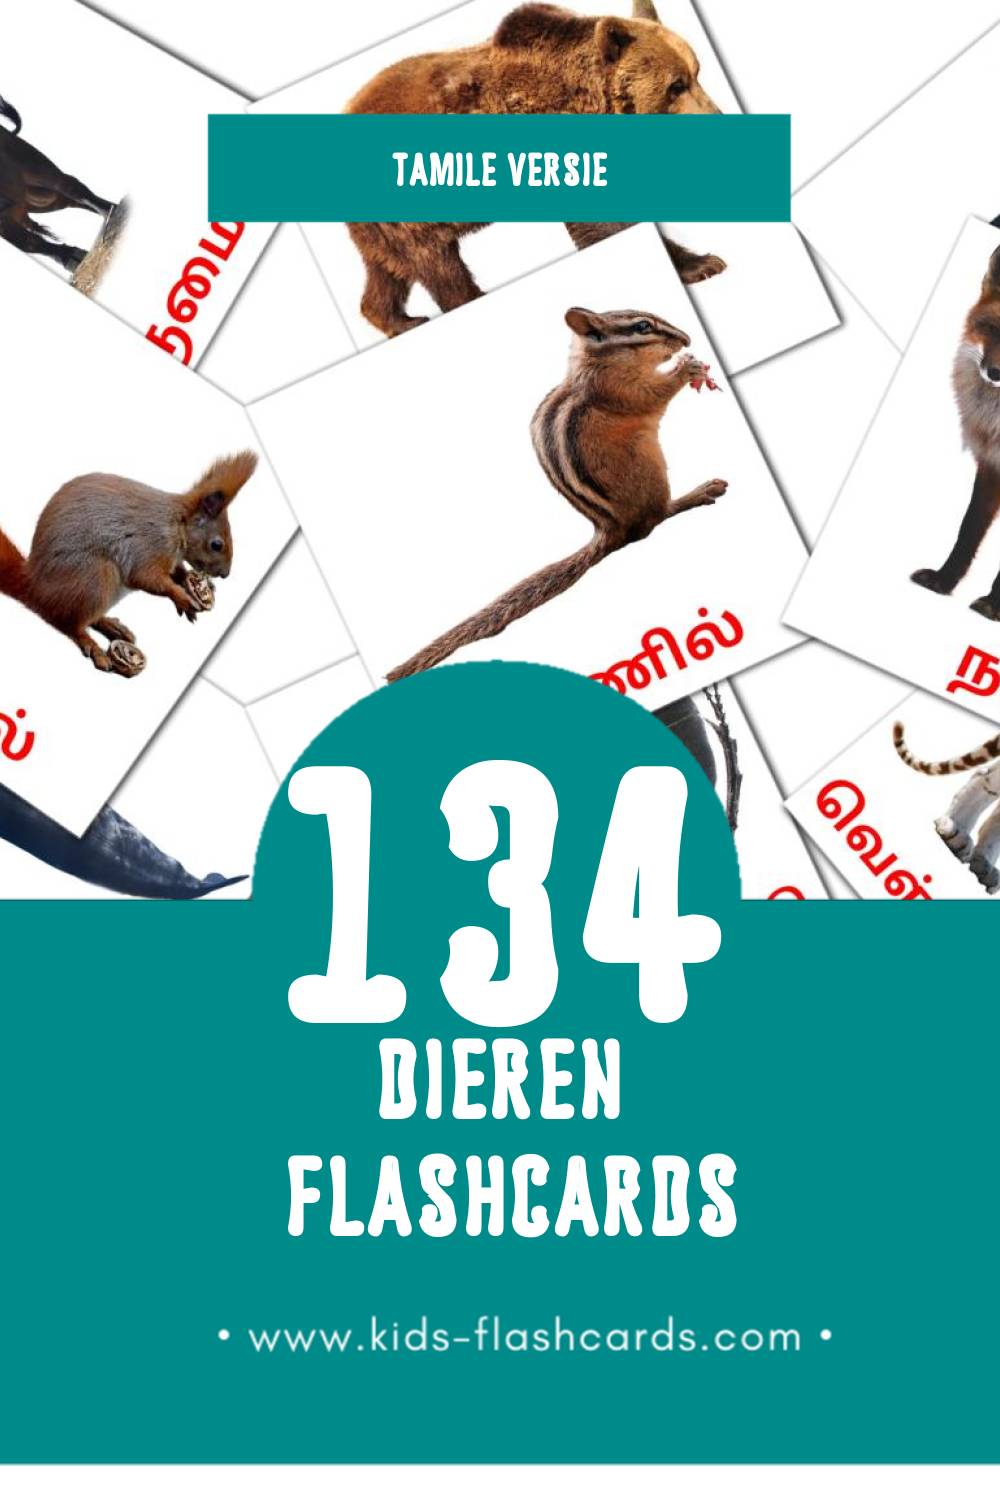 Visuele விலங்குகள் Flashcards voor Kleuters (134 kaarten in het Tamil)